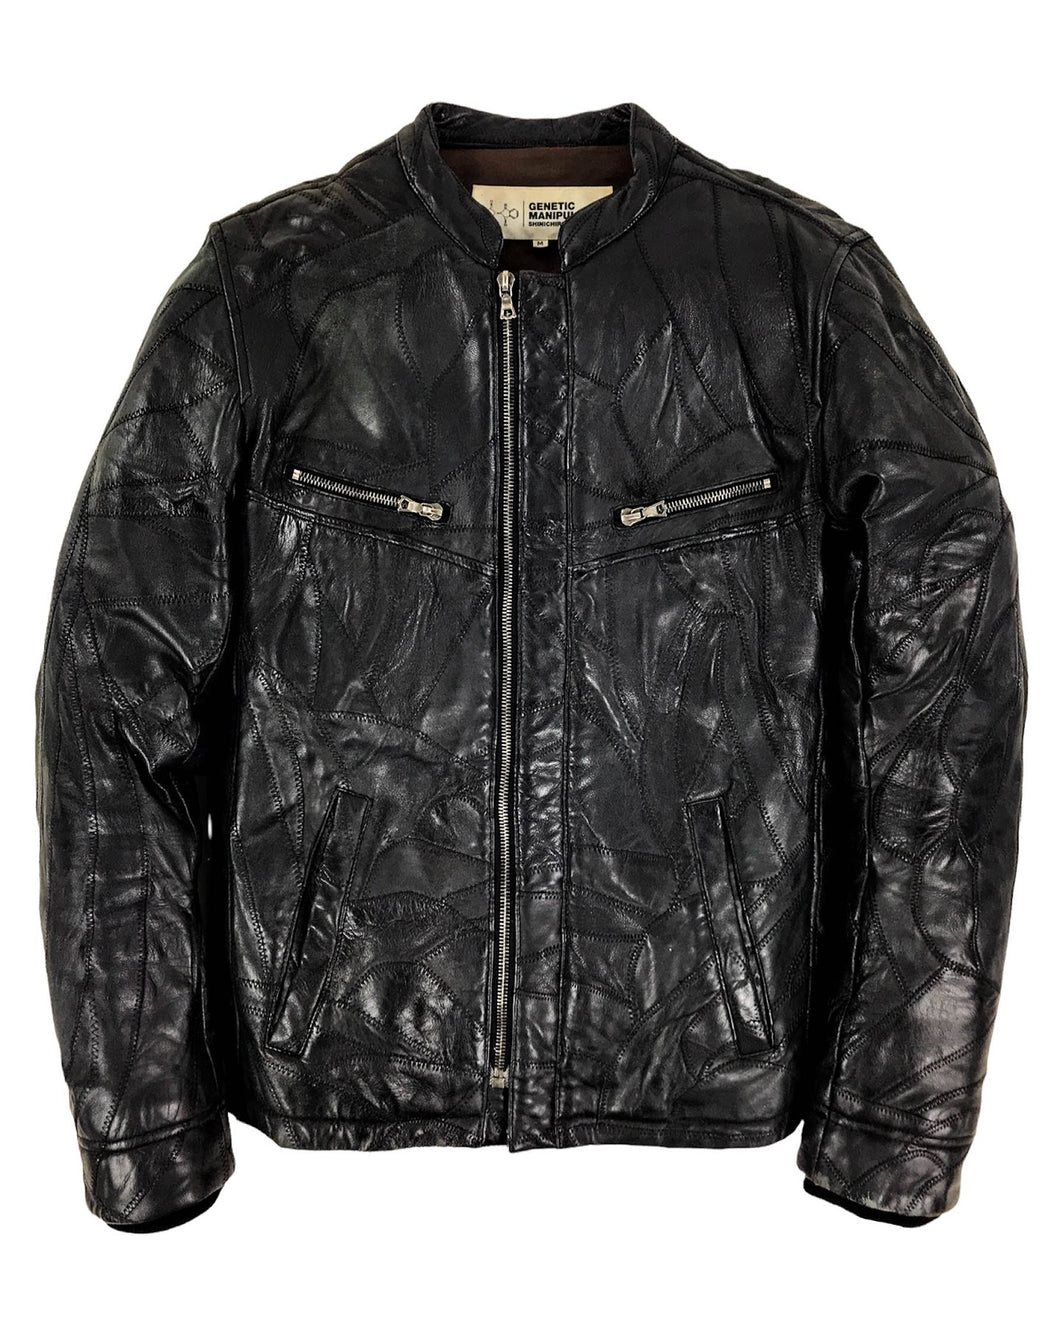 90’s GENETIC MANIPULATION Patchwork Sheepskin Leather Jacket (M)